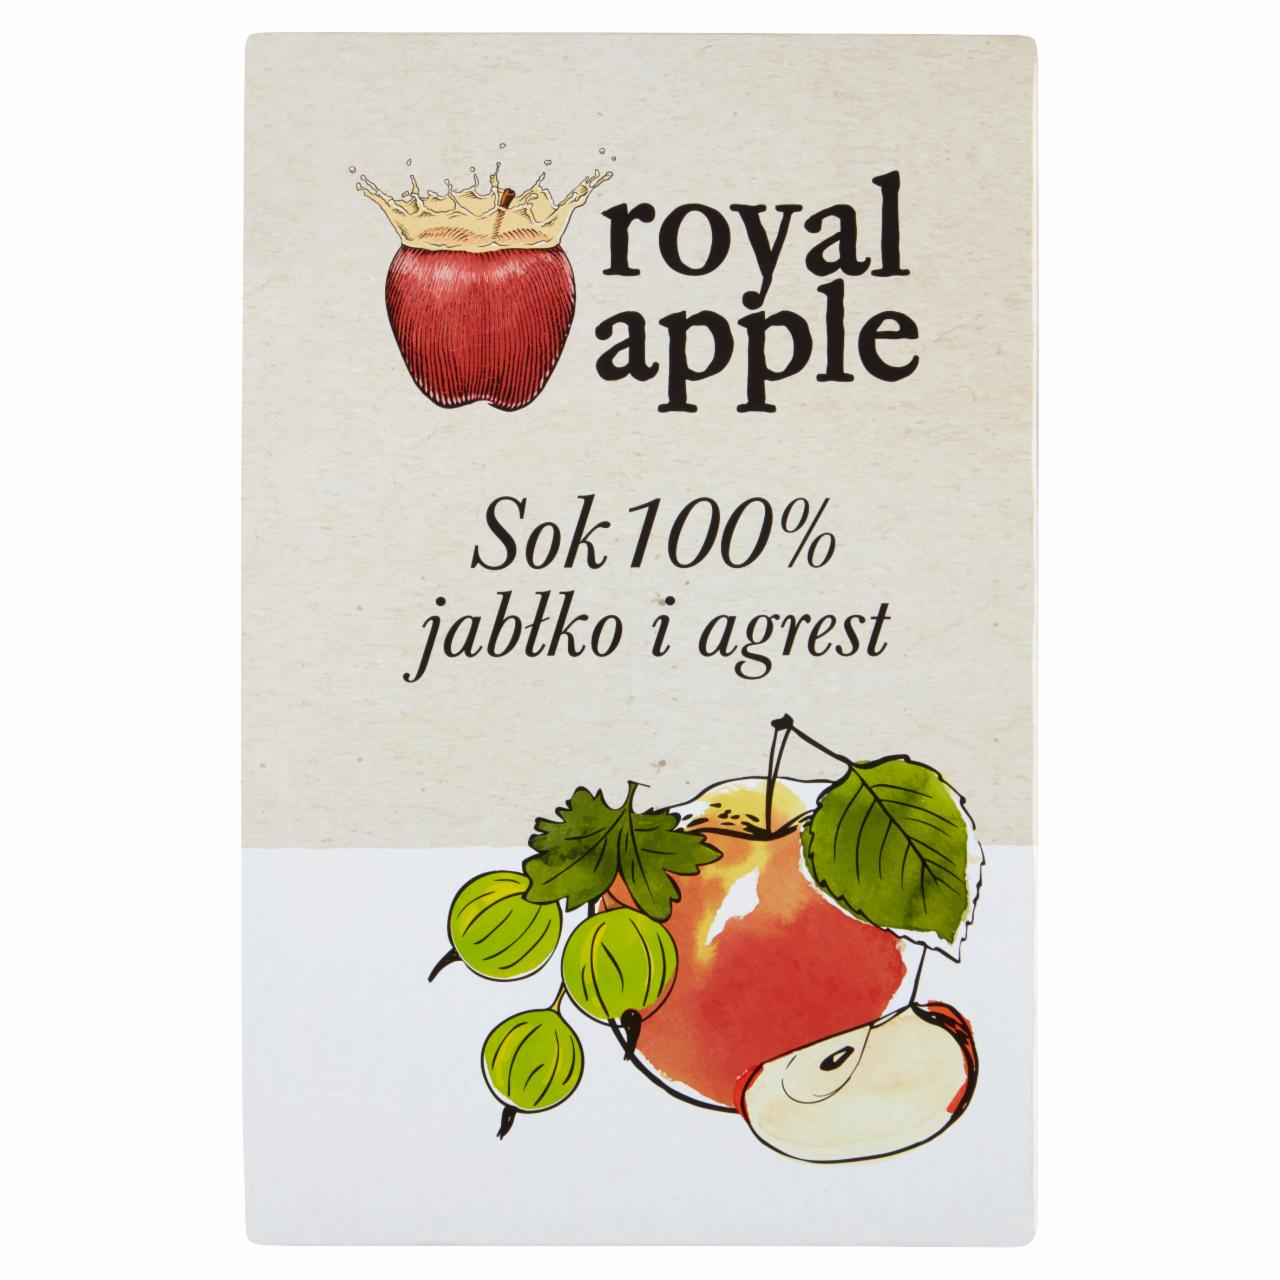 Zdjęcia - Royal apple Sok 100 % jabłko i agrest 3 l